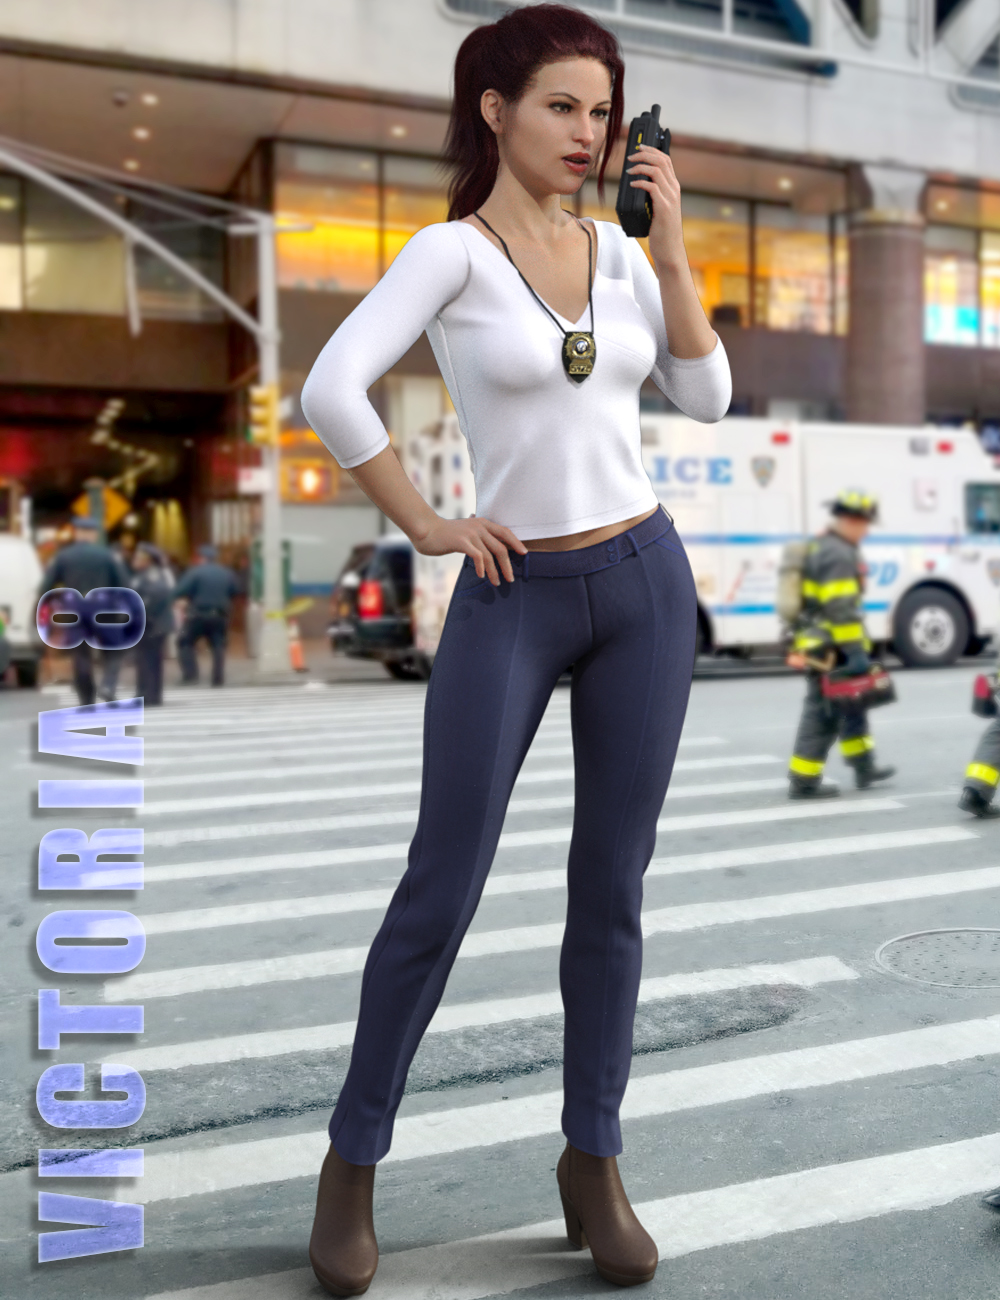 Manhattan Detective for Genesis 8 Female(s) by: Blue Rabbit, 3D Models by Daz 3D